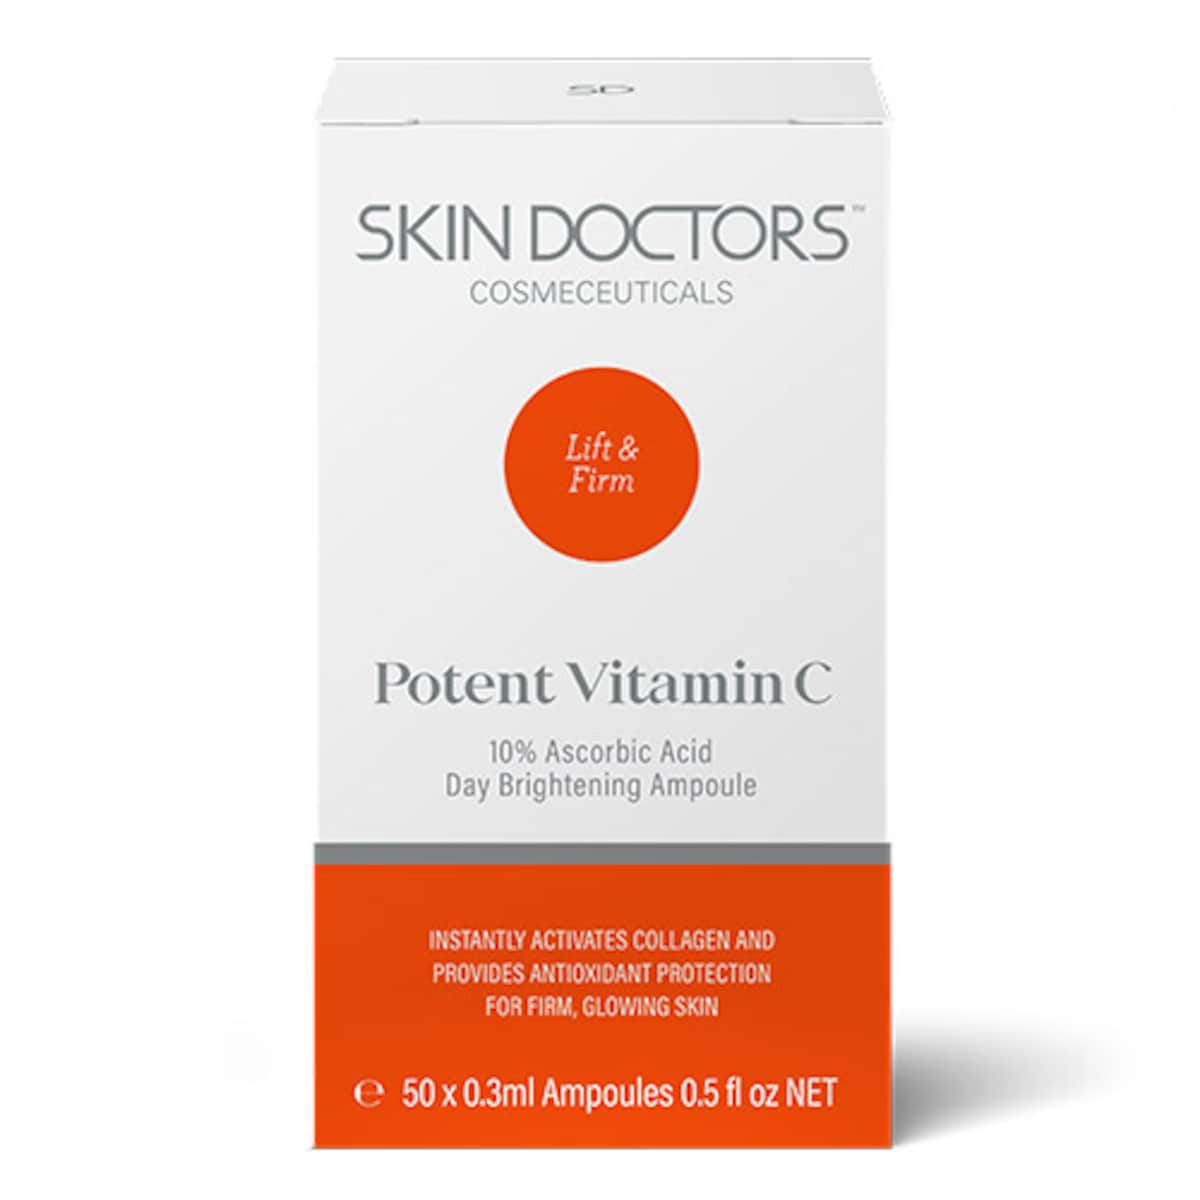 Skin Doctors Potent Vitamin C 50 x 0.3ml Ampoules